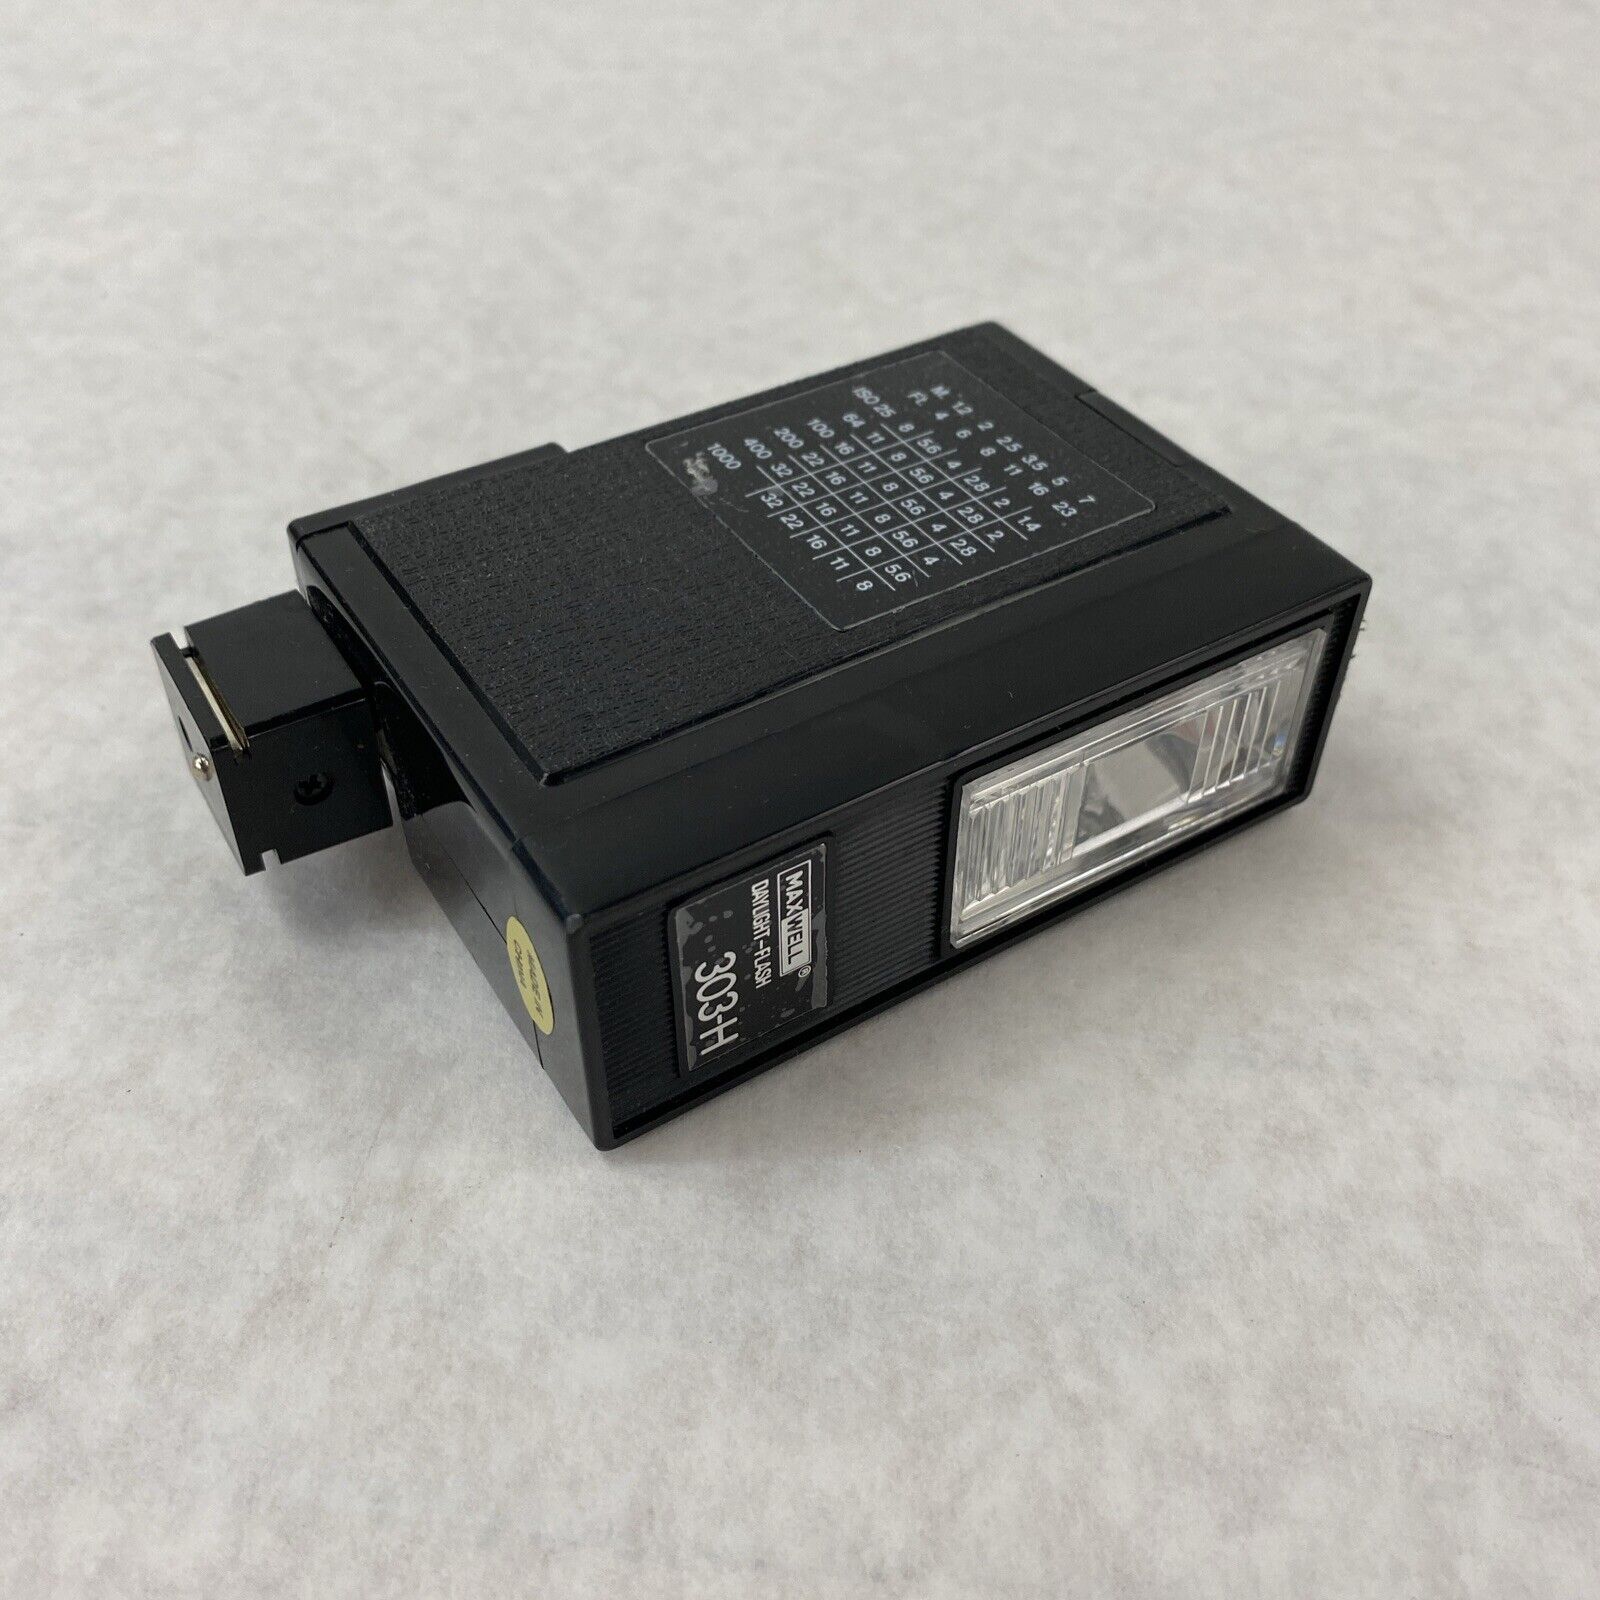 Maxwell 303-H Camera Flash Unit